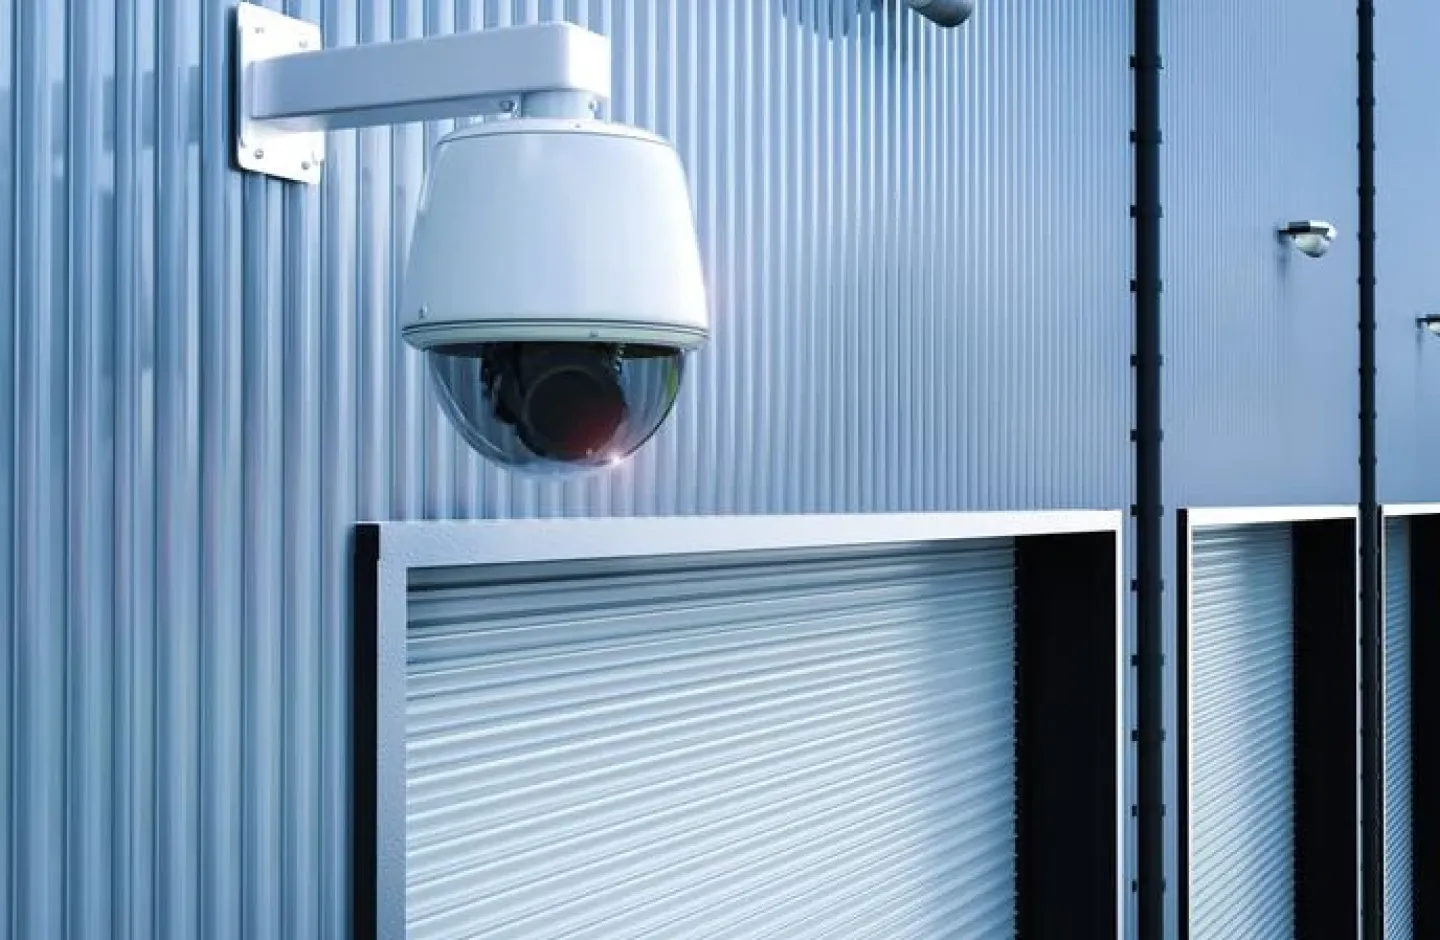 Warehouse CCTV